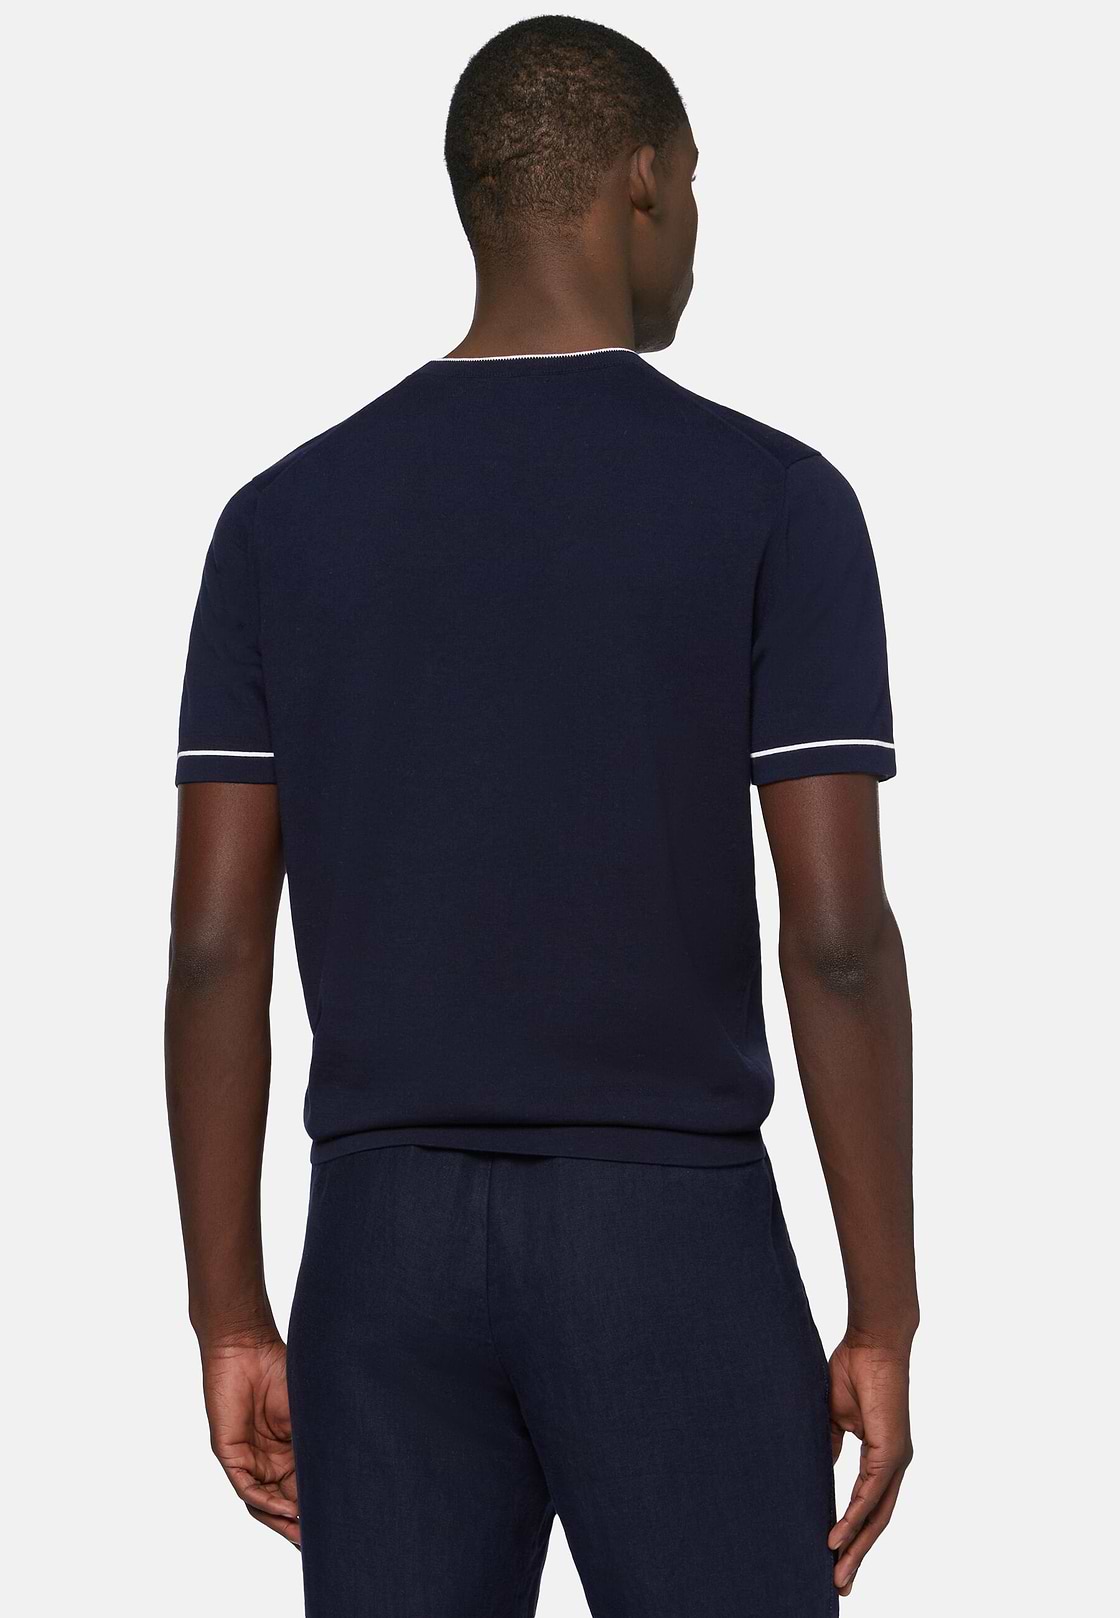 Navy Cotton Crepe Knit T-shirt, Navy blue, hi-res